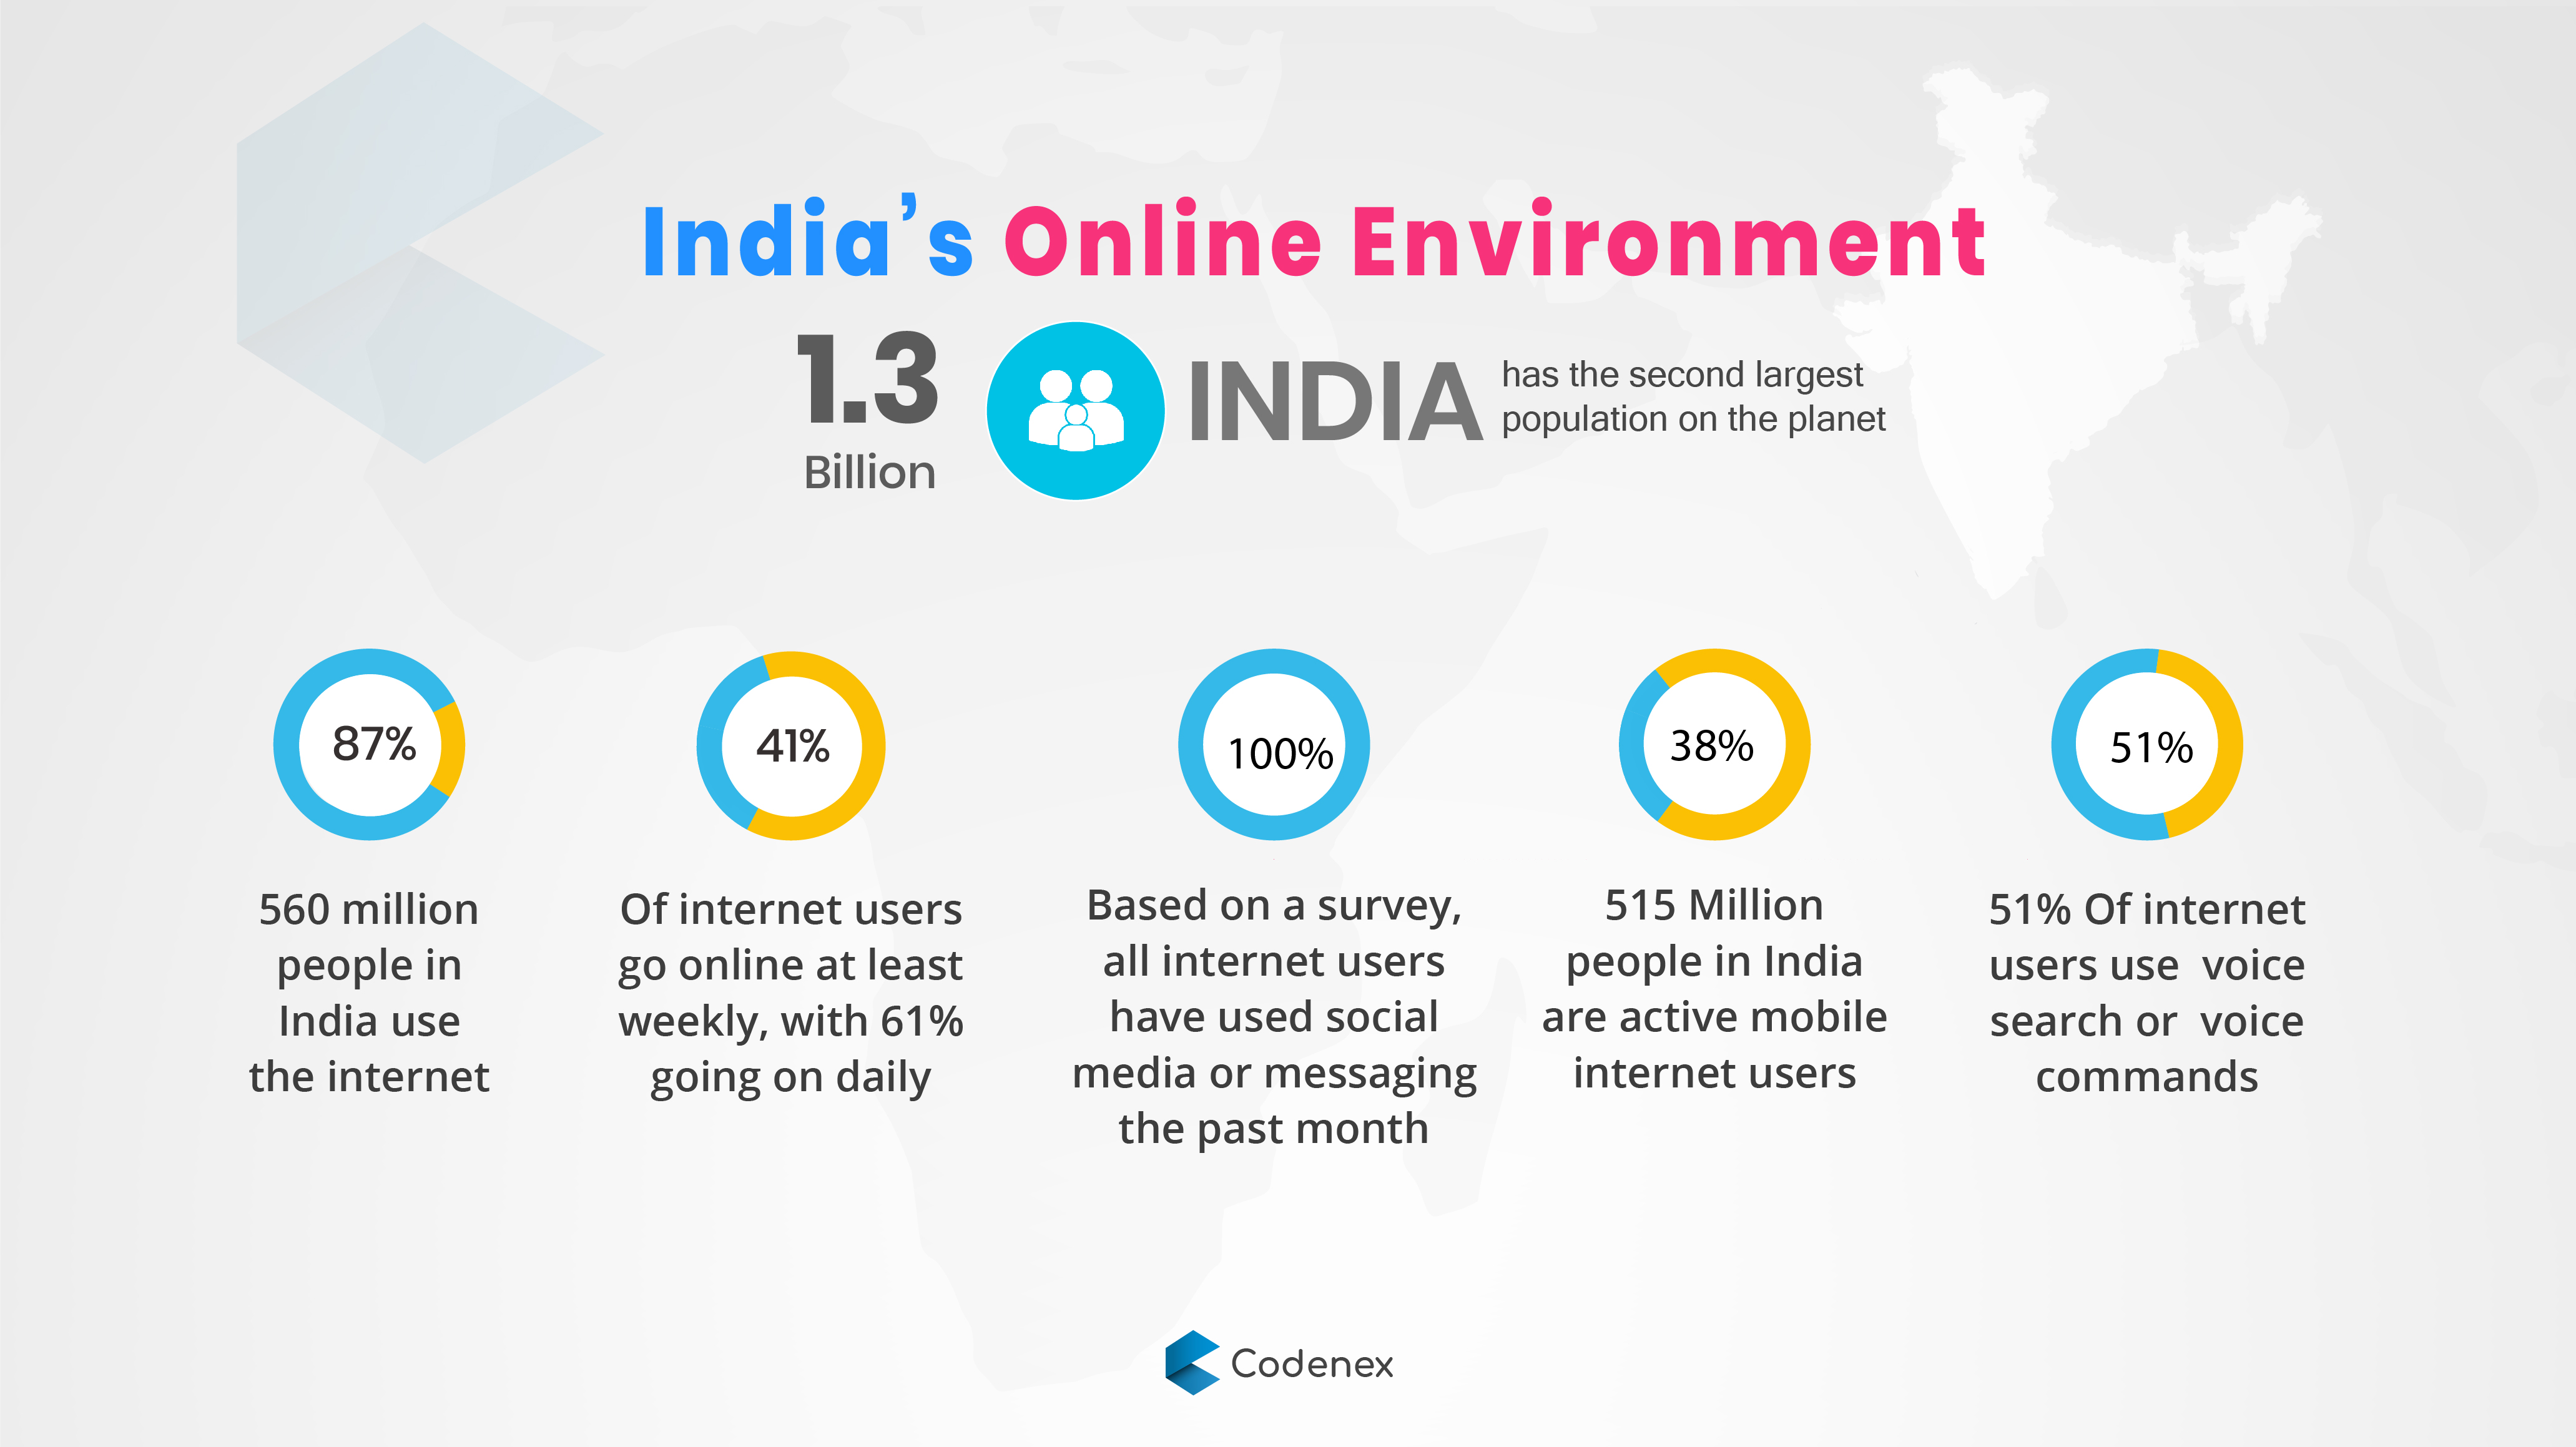 India's internet usage